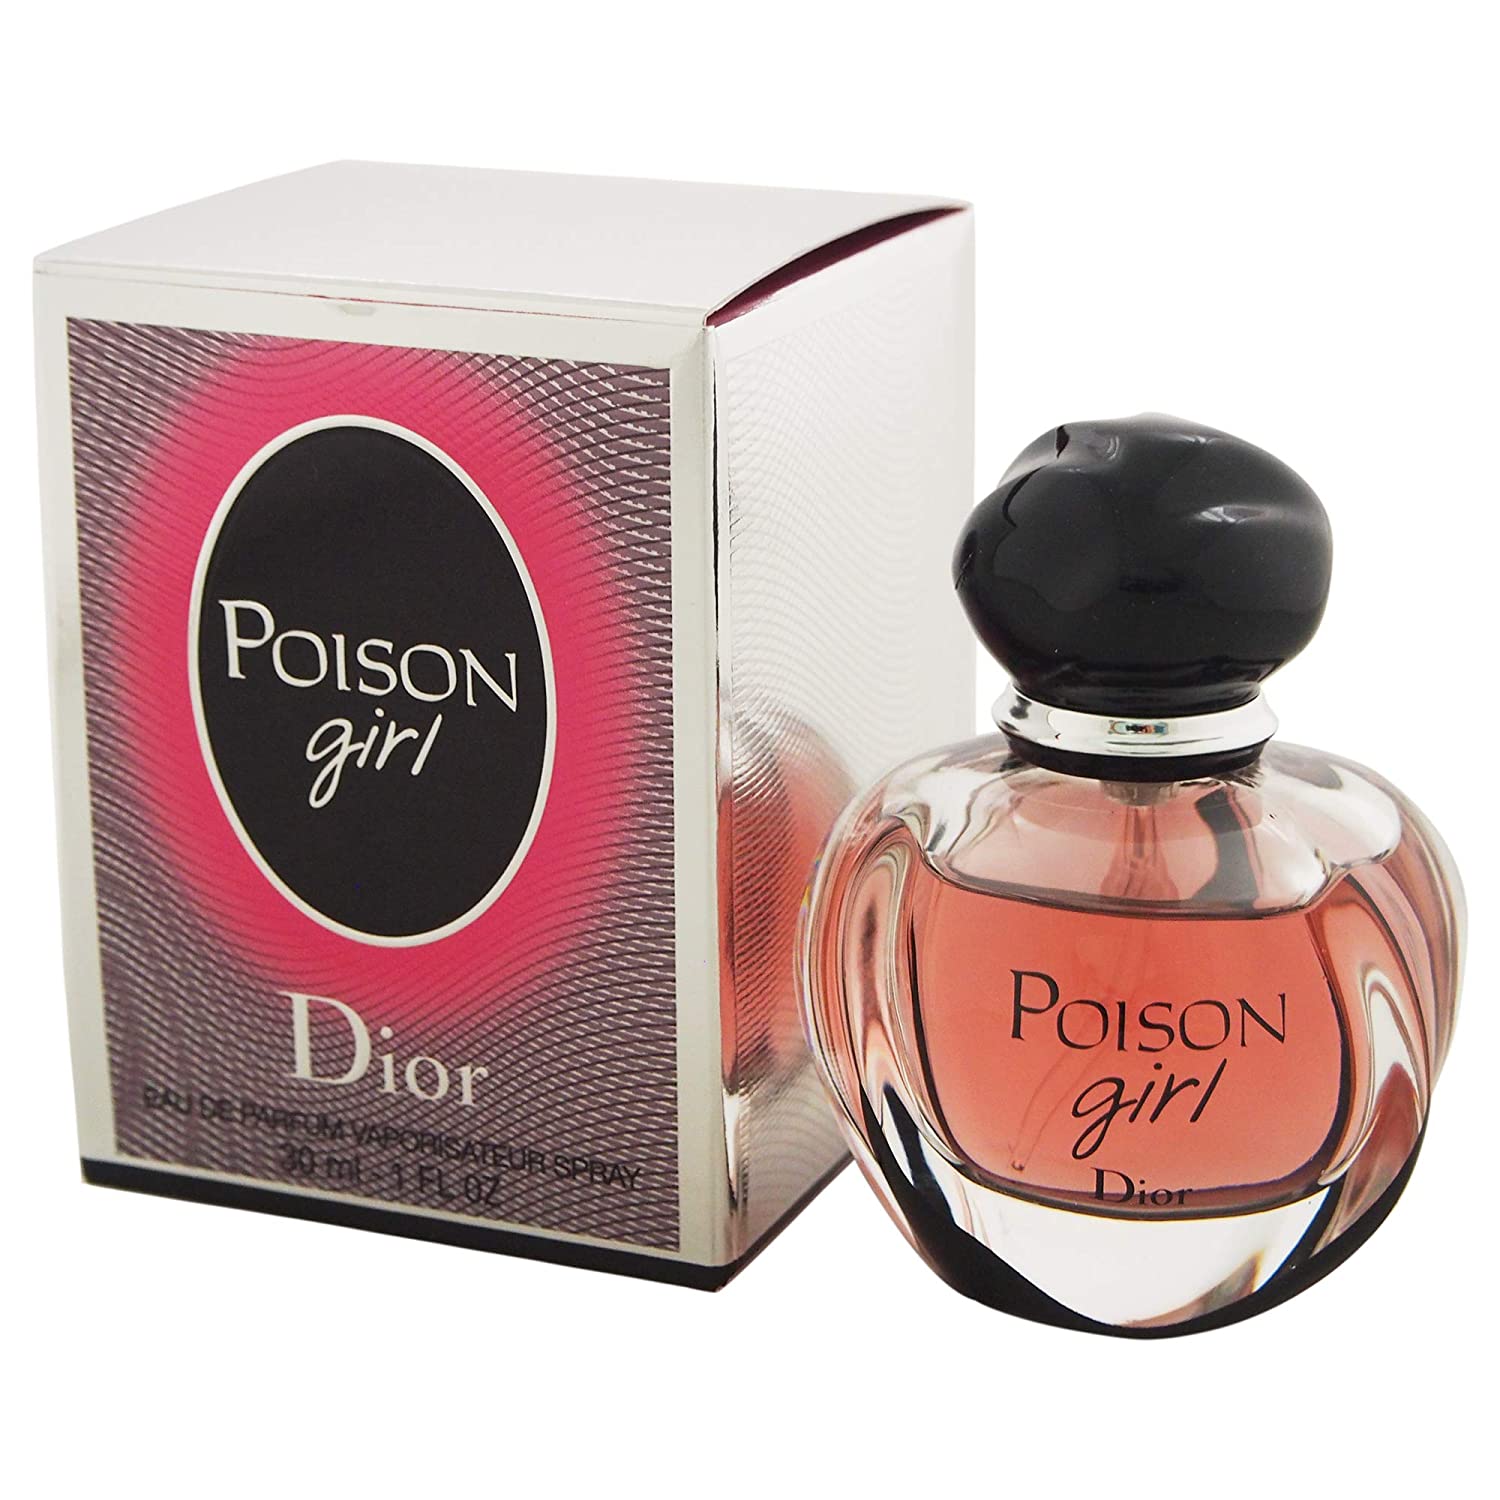 Dior  Poison  Girl  Eau de Parfum 30ml